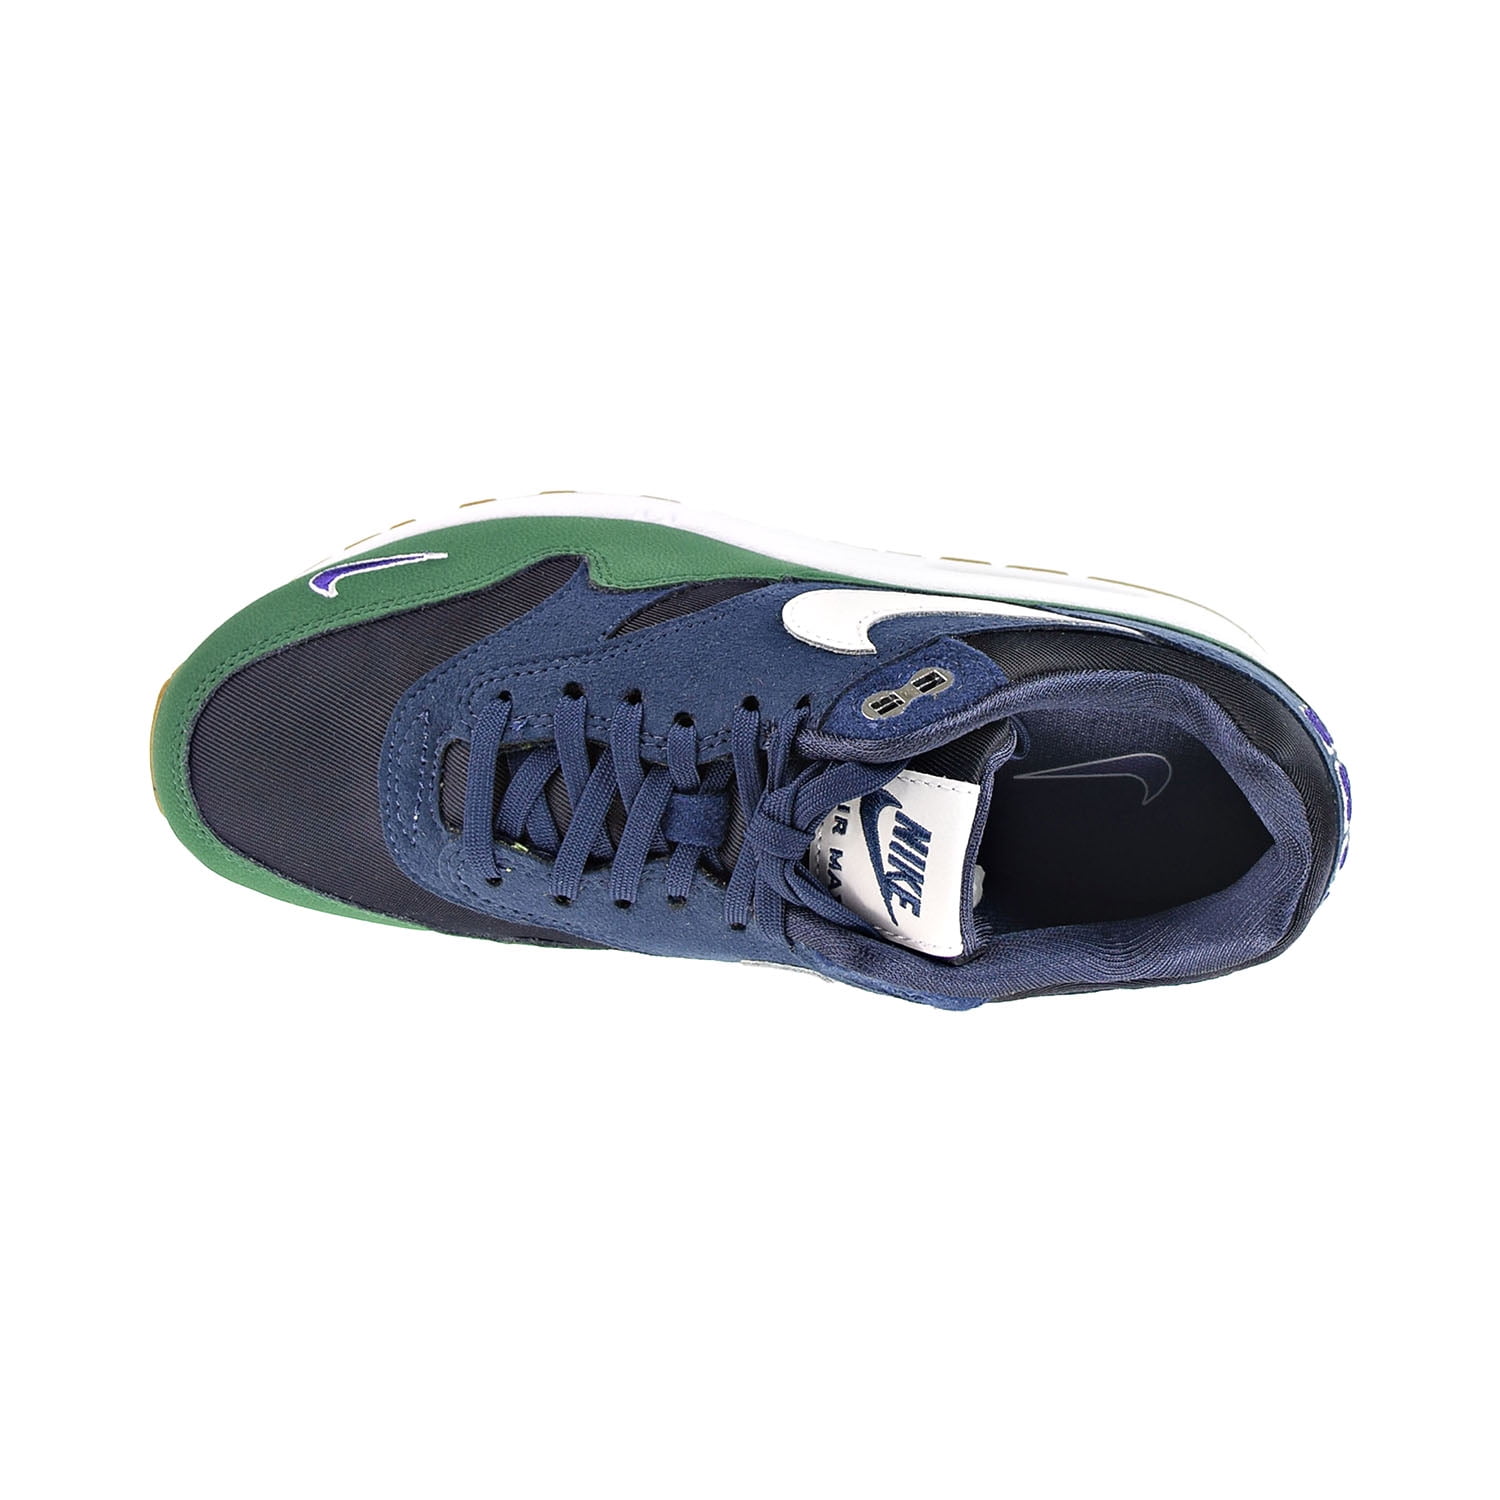 Nike Air Max 1 Women's Shoes Obsidian-White-Midnight Navy dv3887-400 - Walmart.com